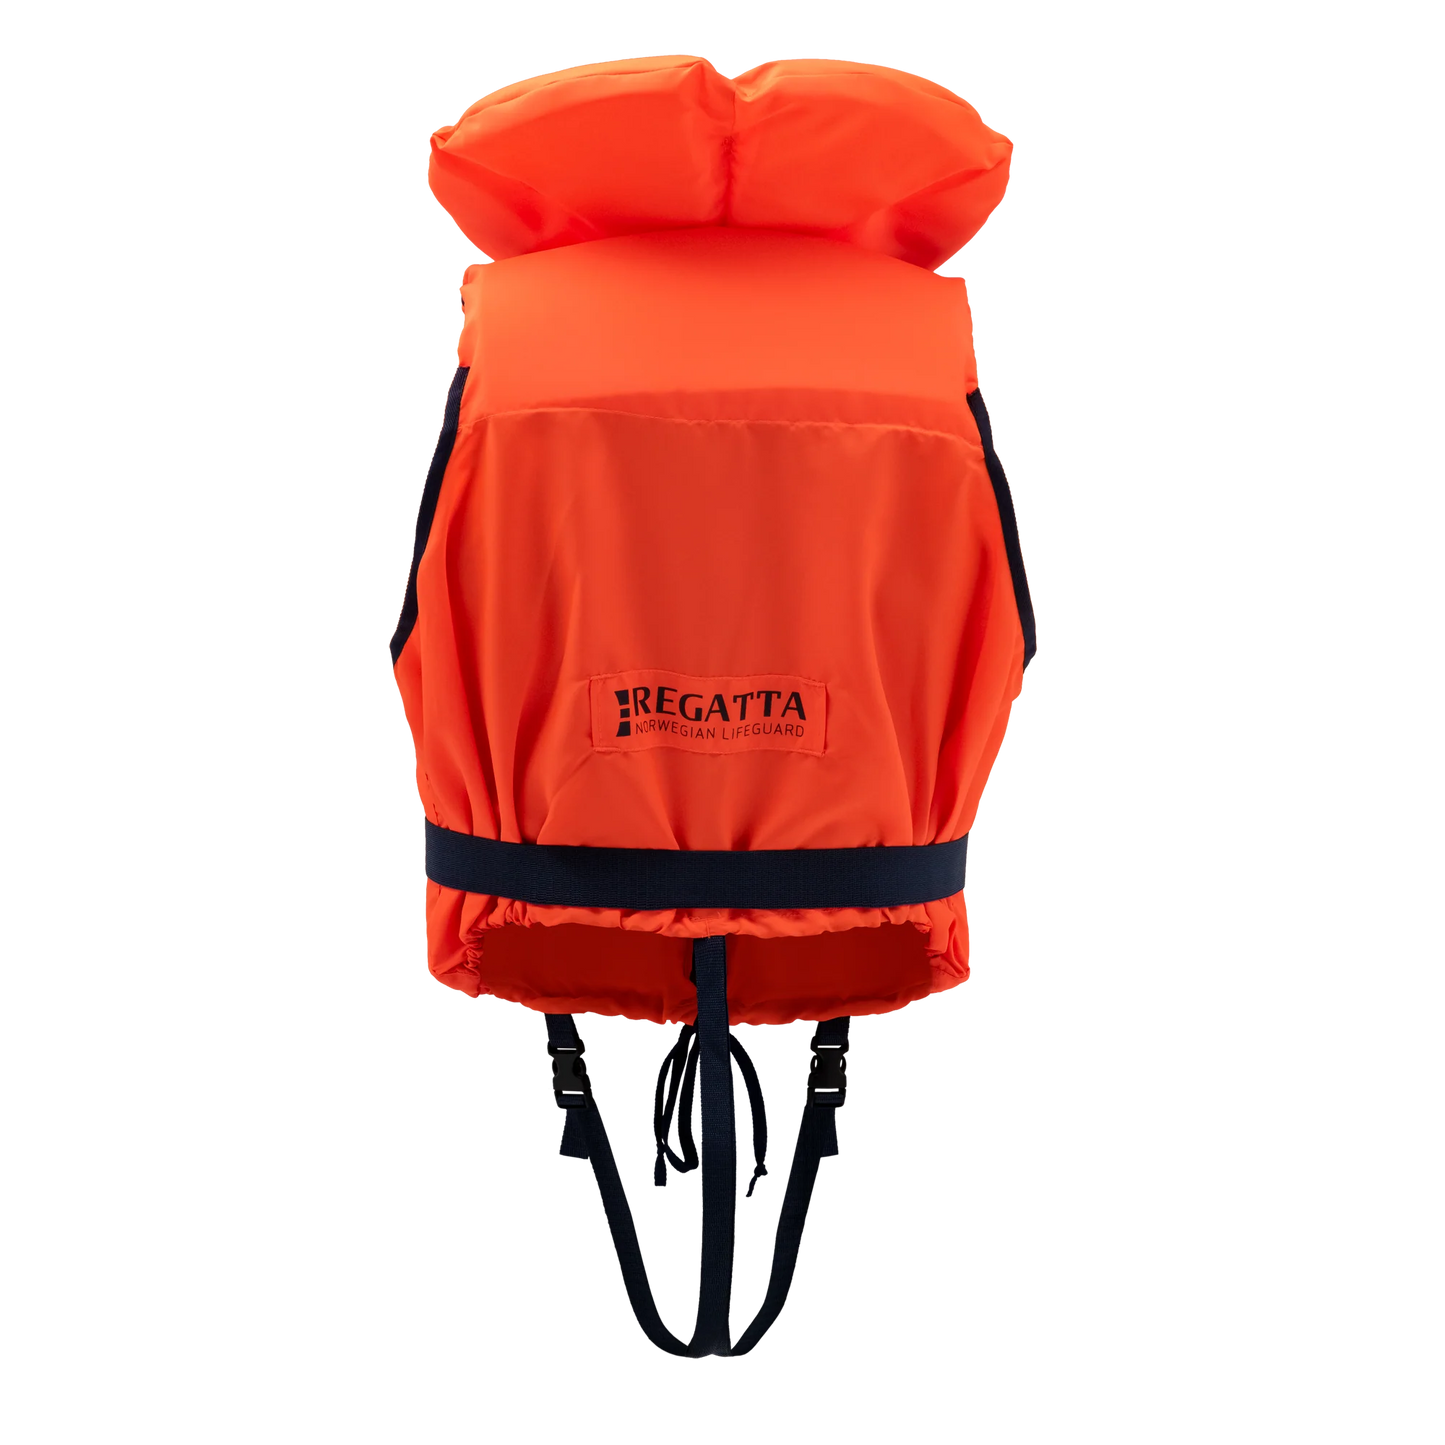 Regatta lifejacket Soft